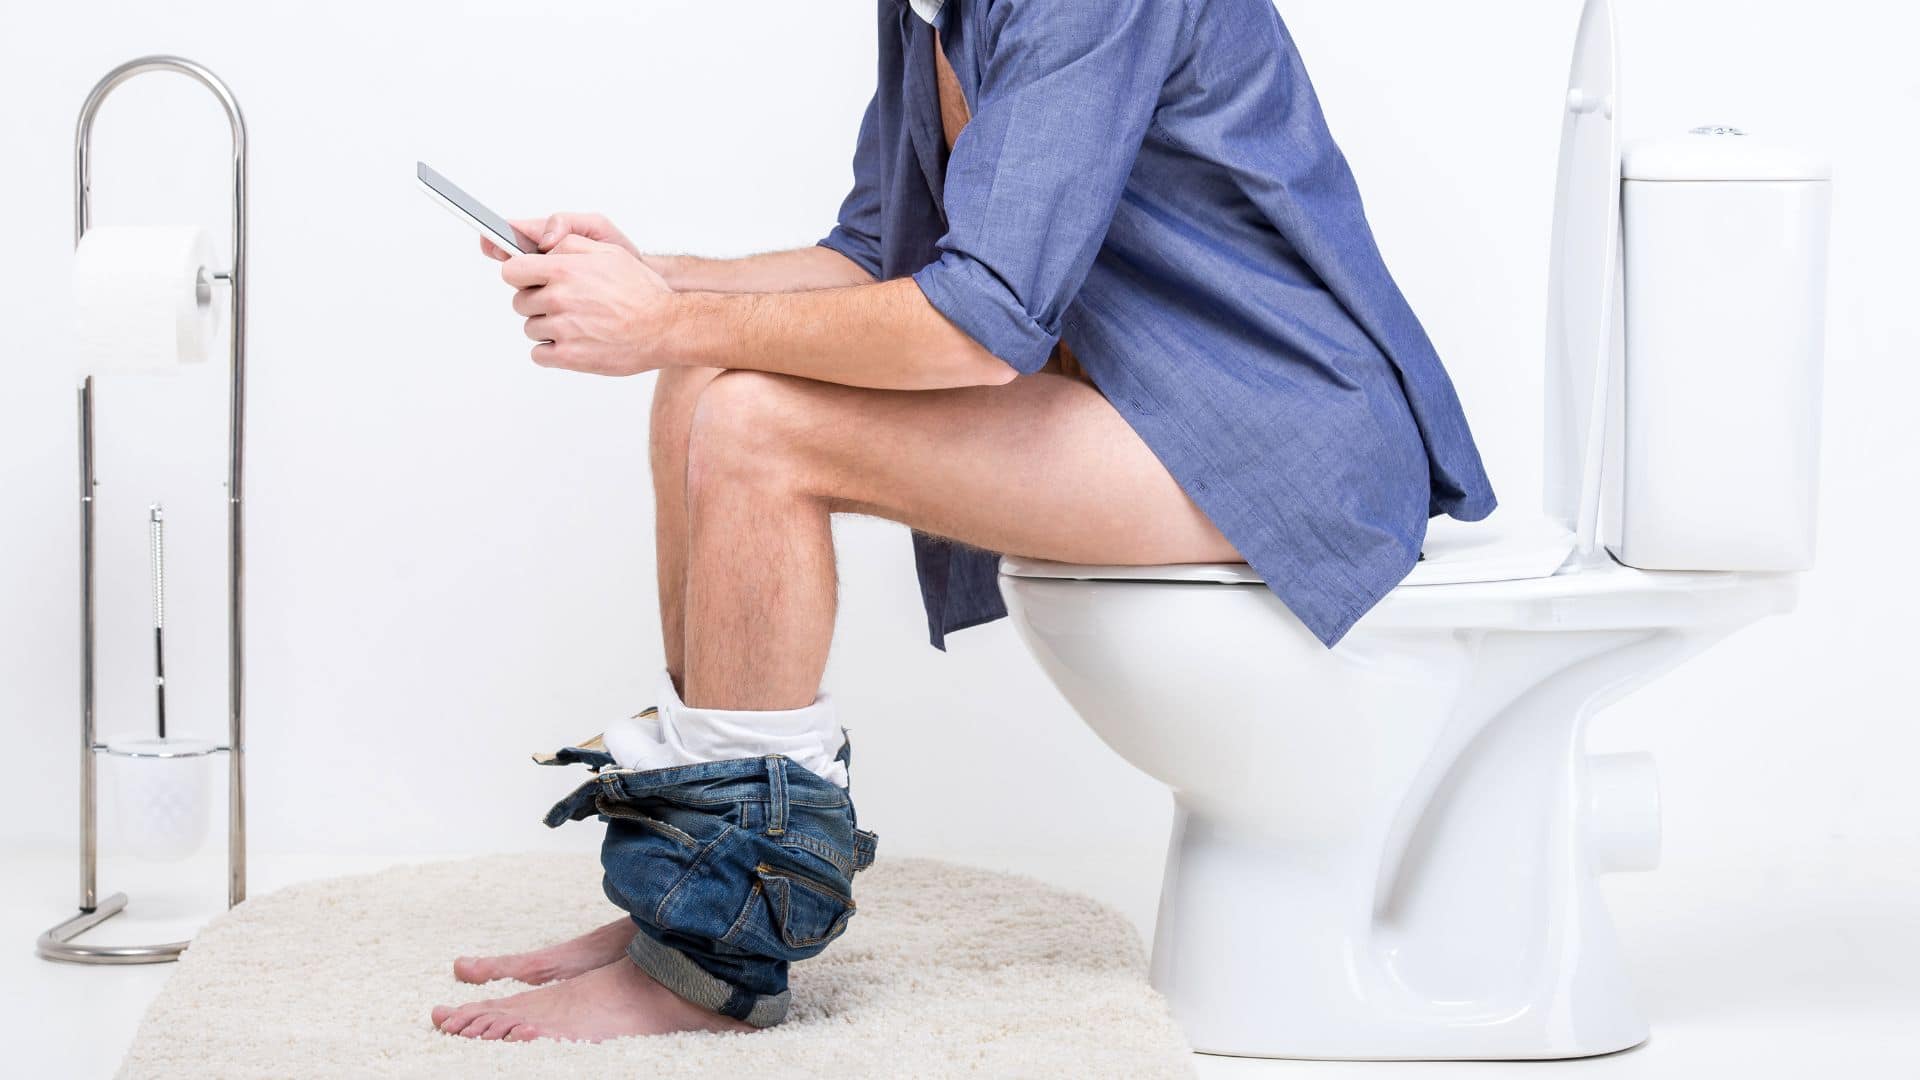 Image showing man sitting on toilet using mobile